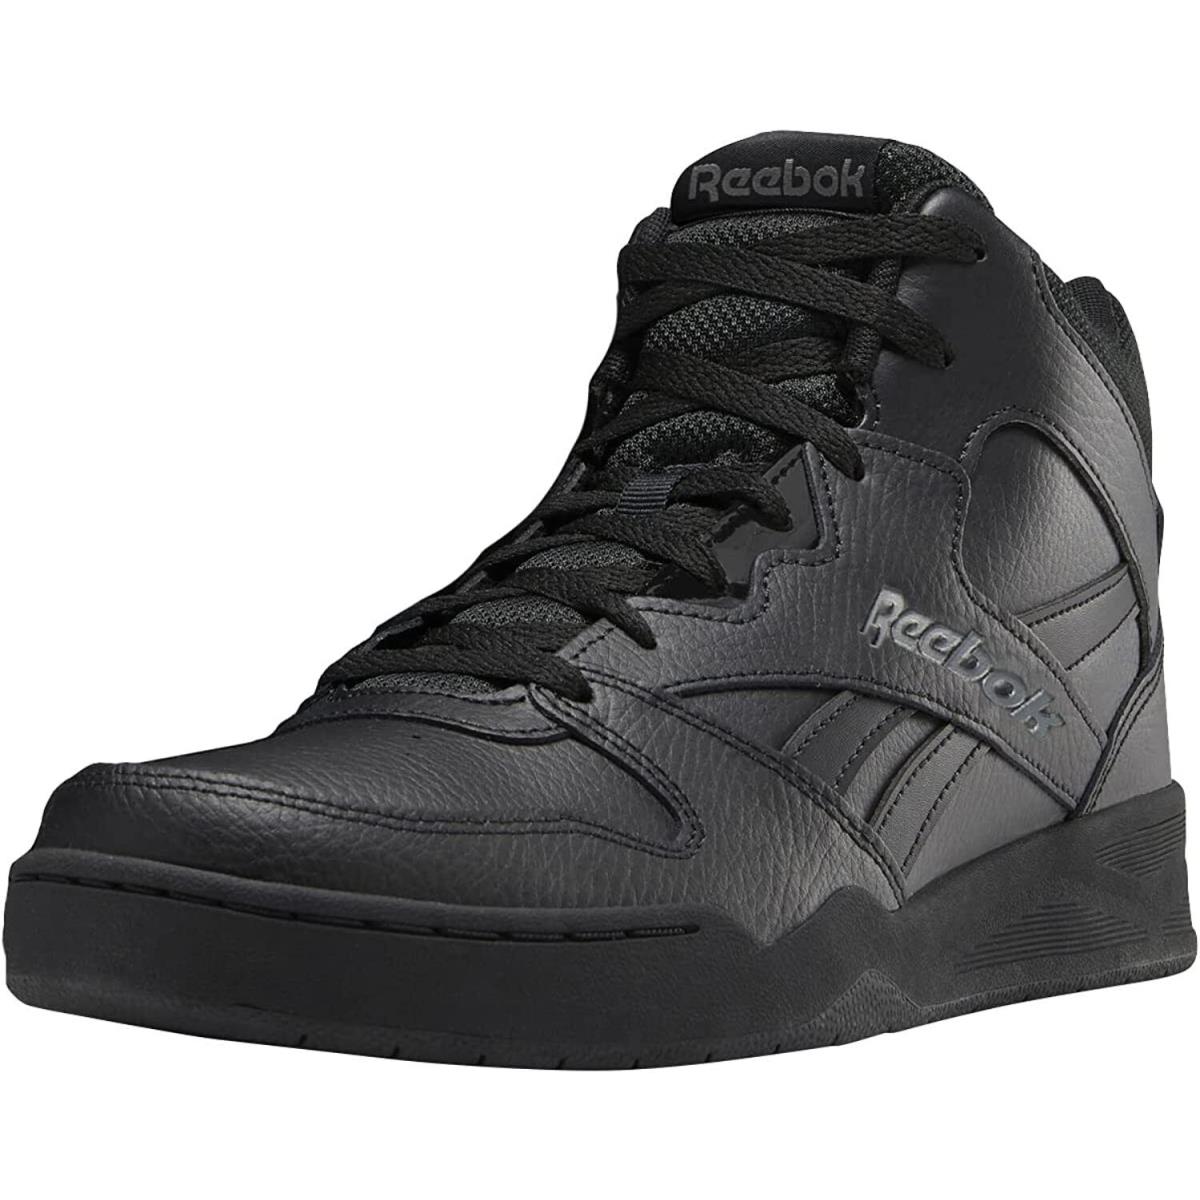 Reebok Mens Shoes Royal BB4500 Hi 2 Black High Leather Textile Black Sneaker